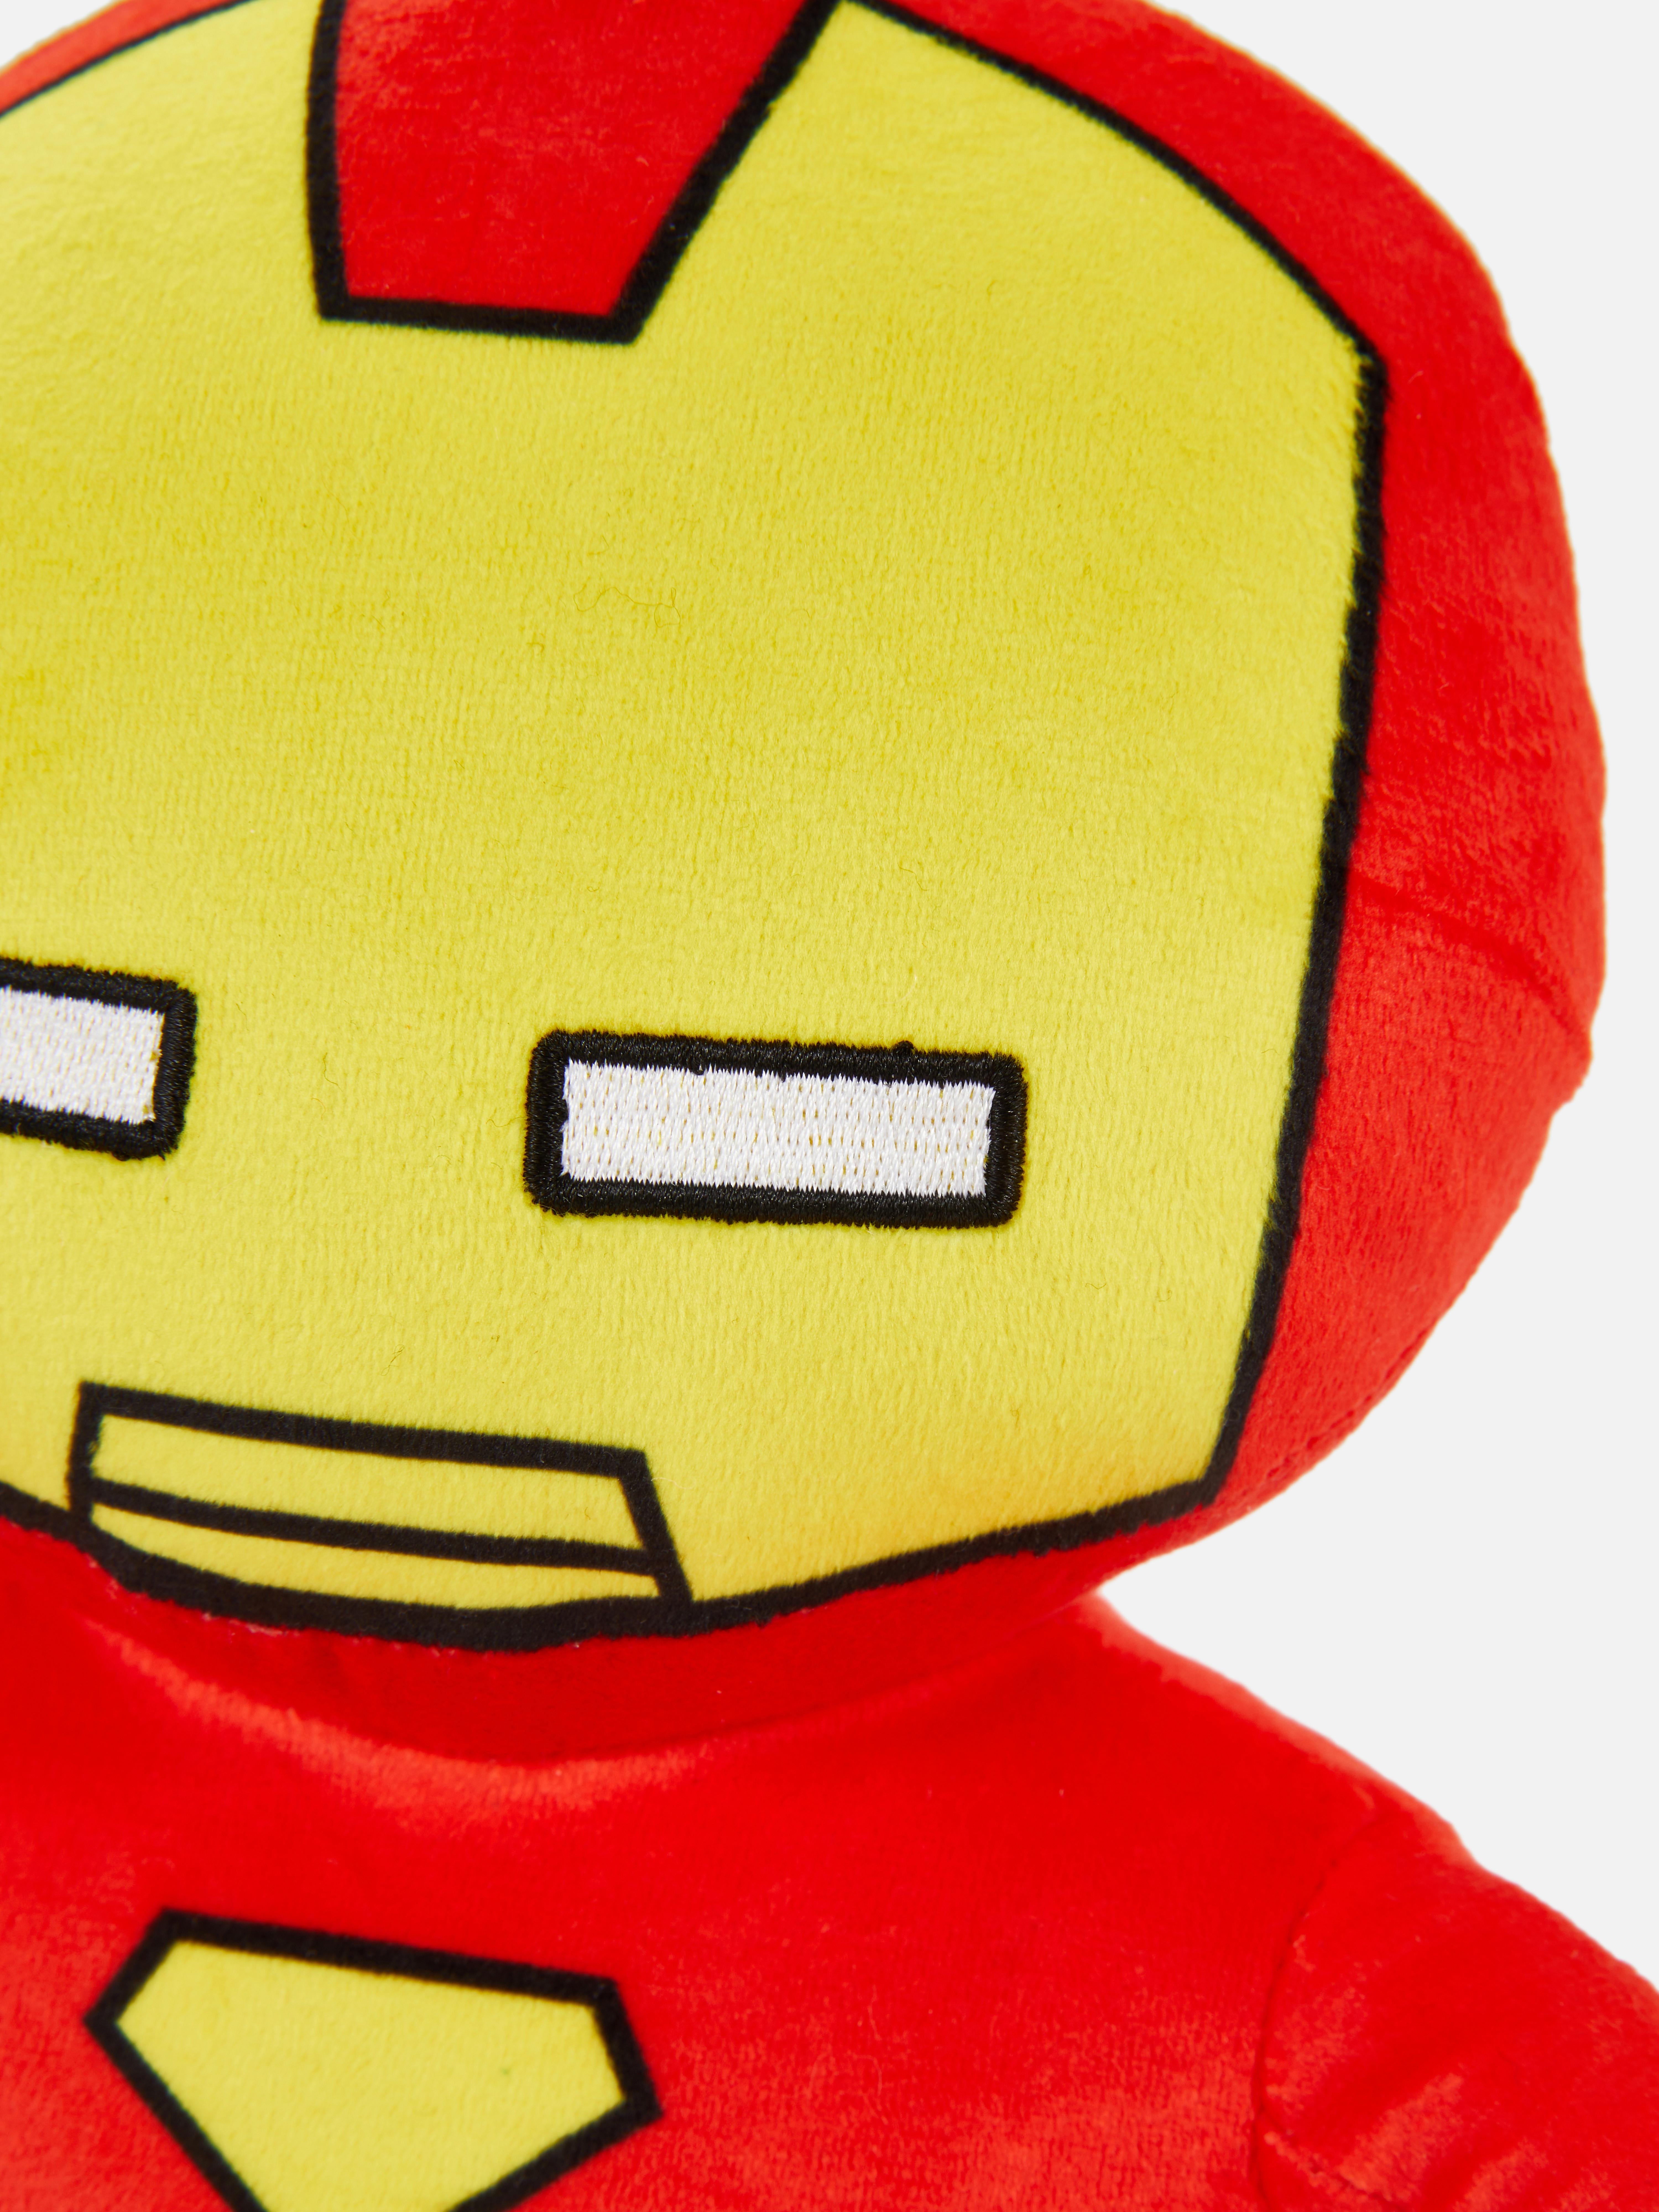 Marvel Iron Man Plush Toy